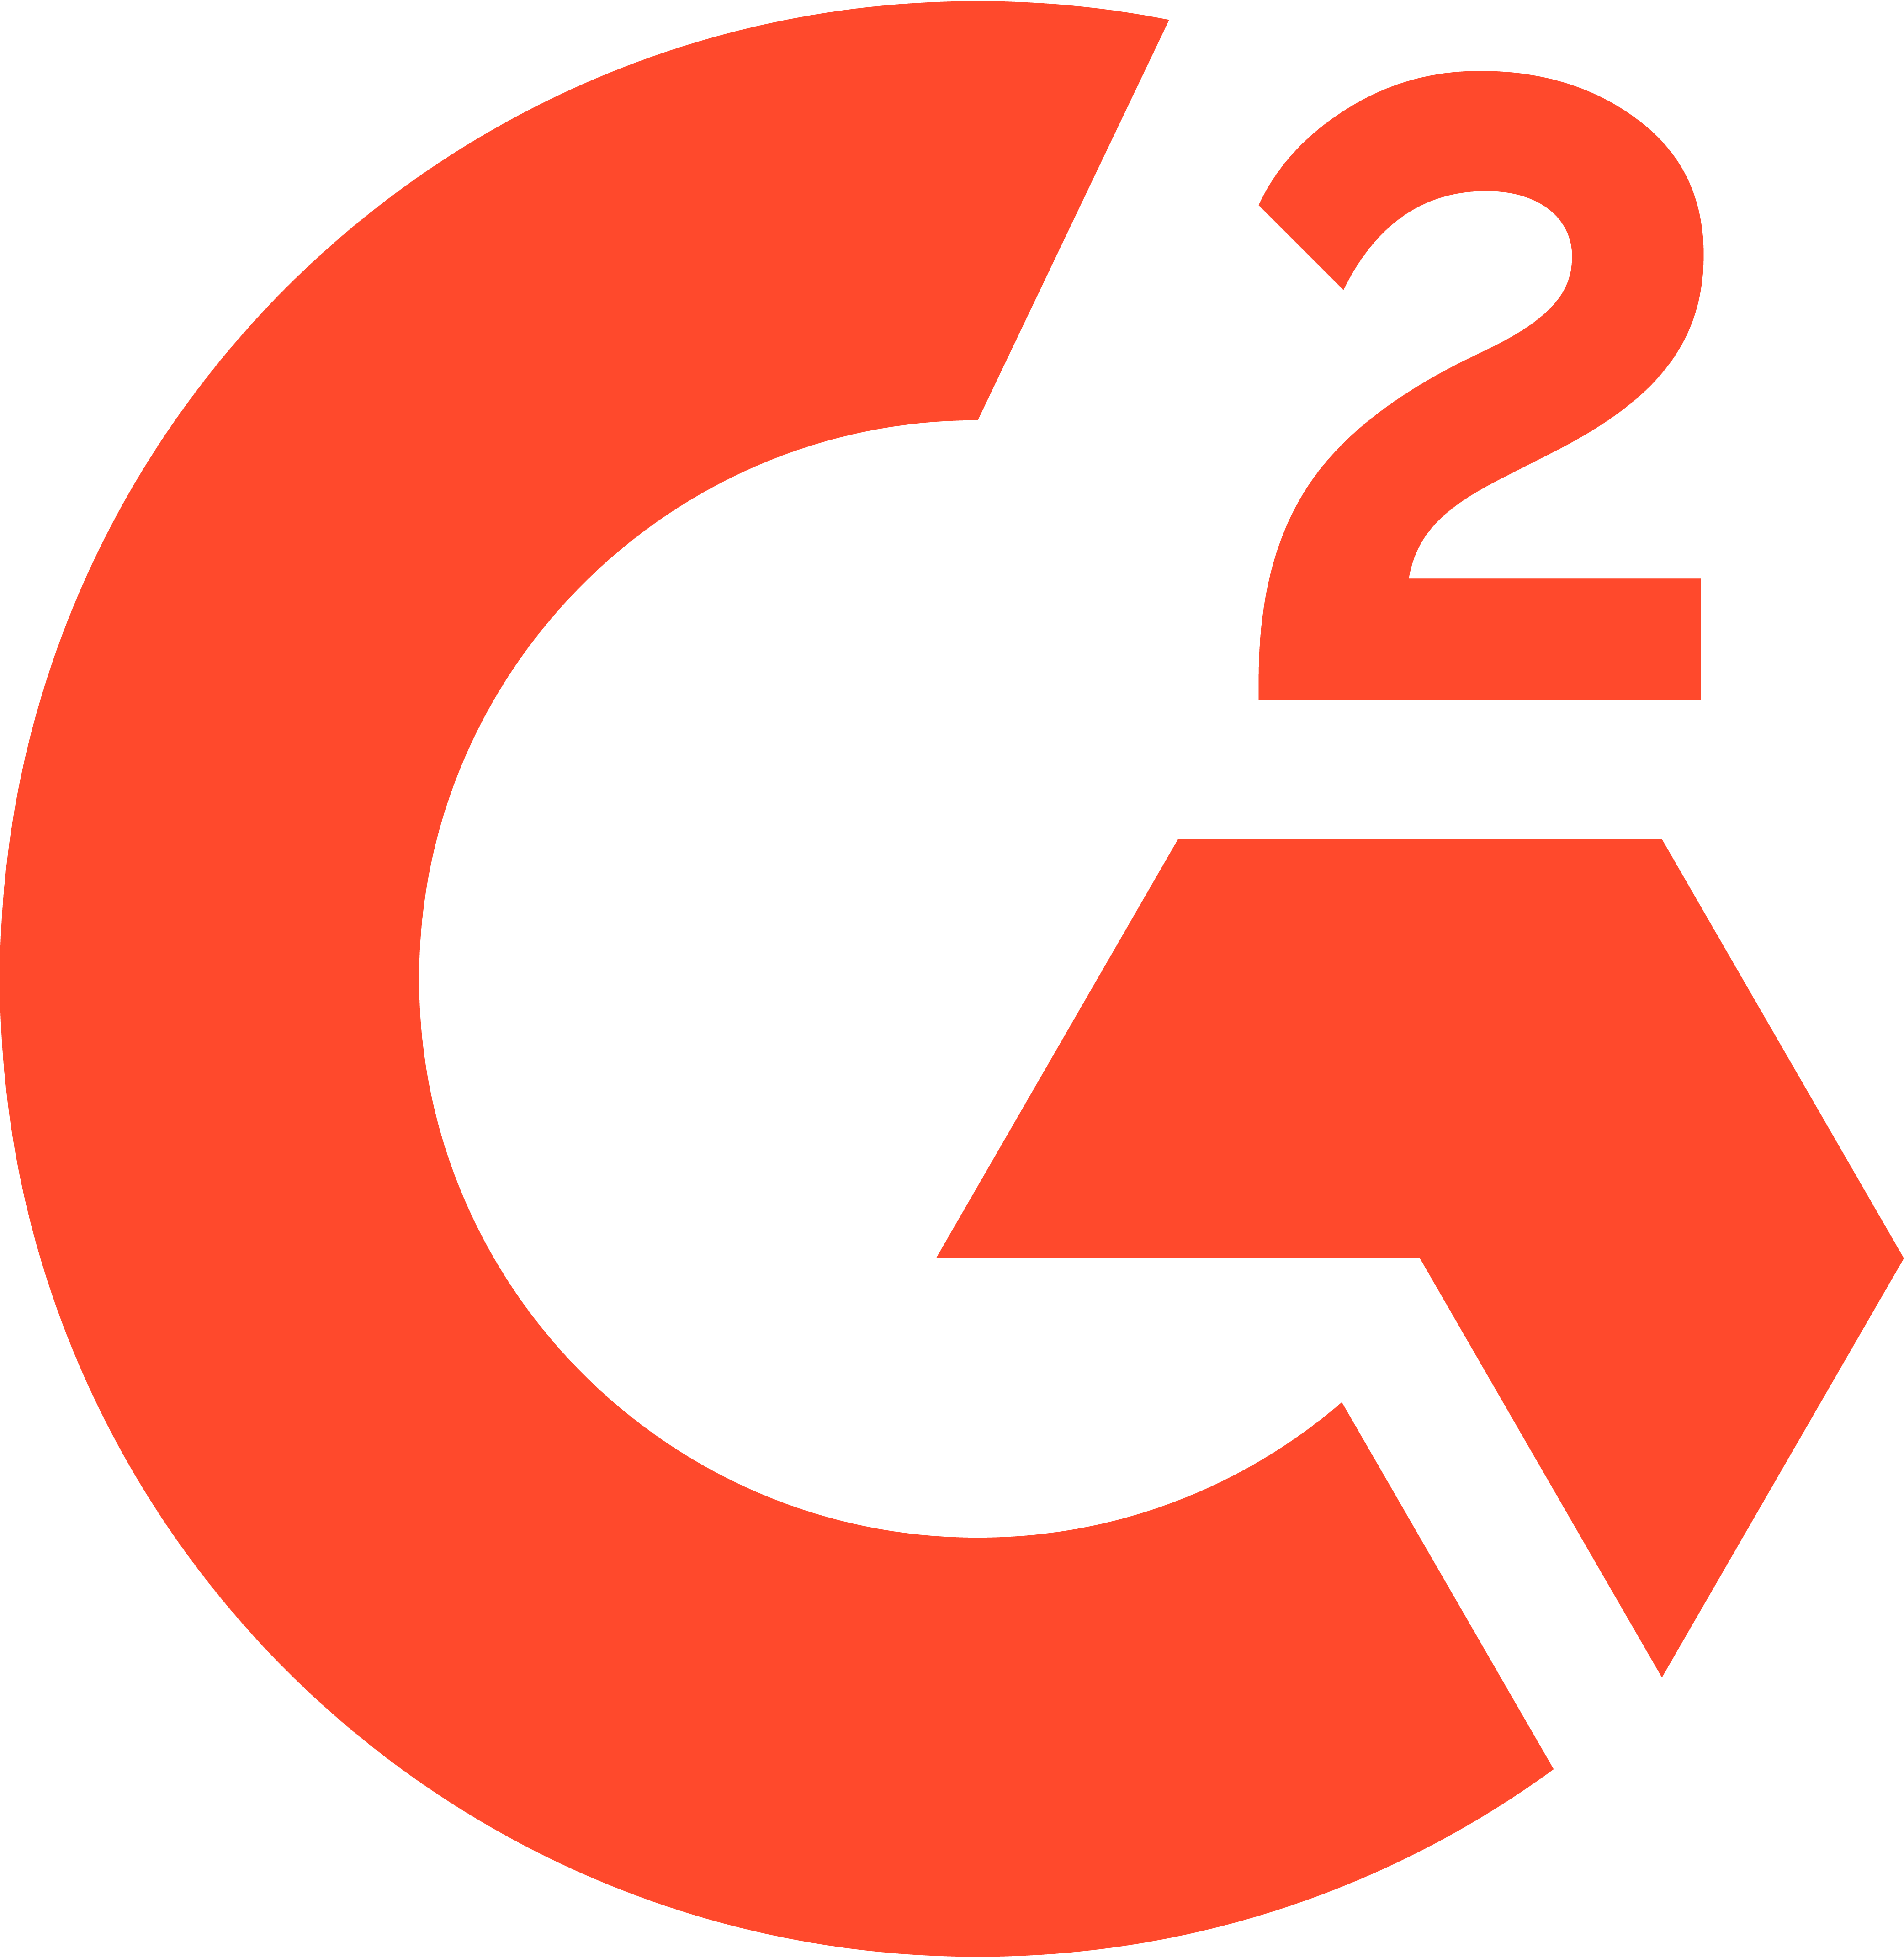 G2 logo logo